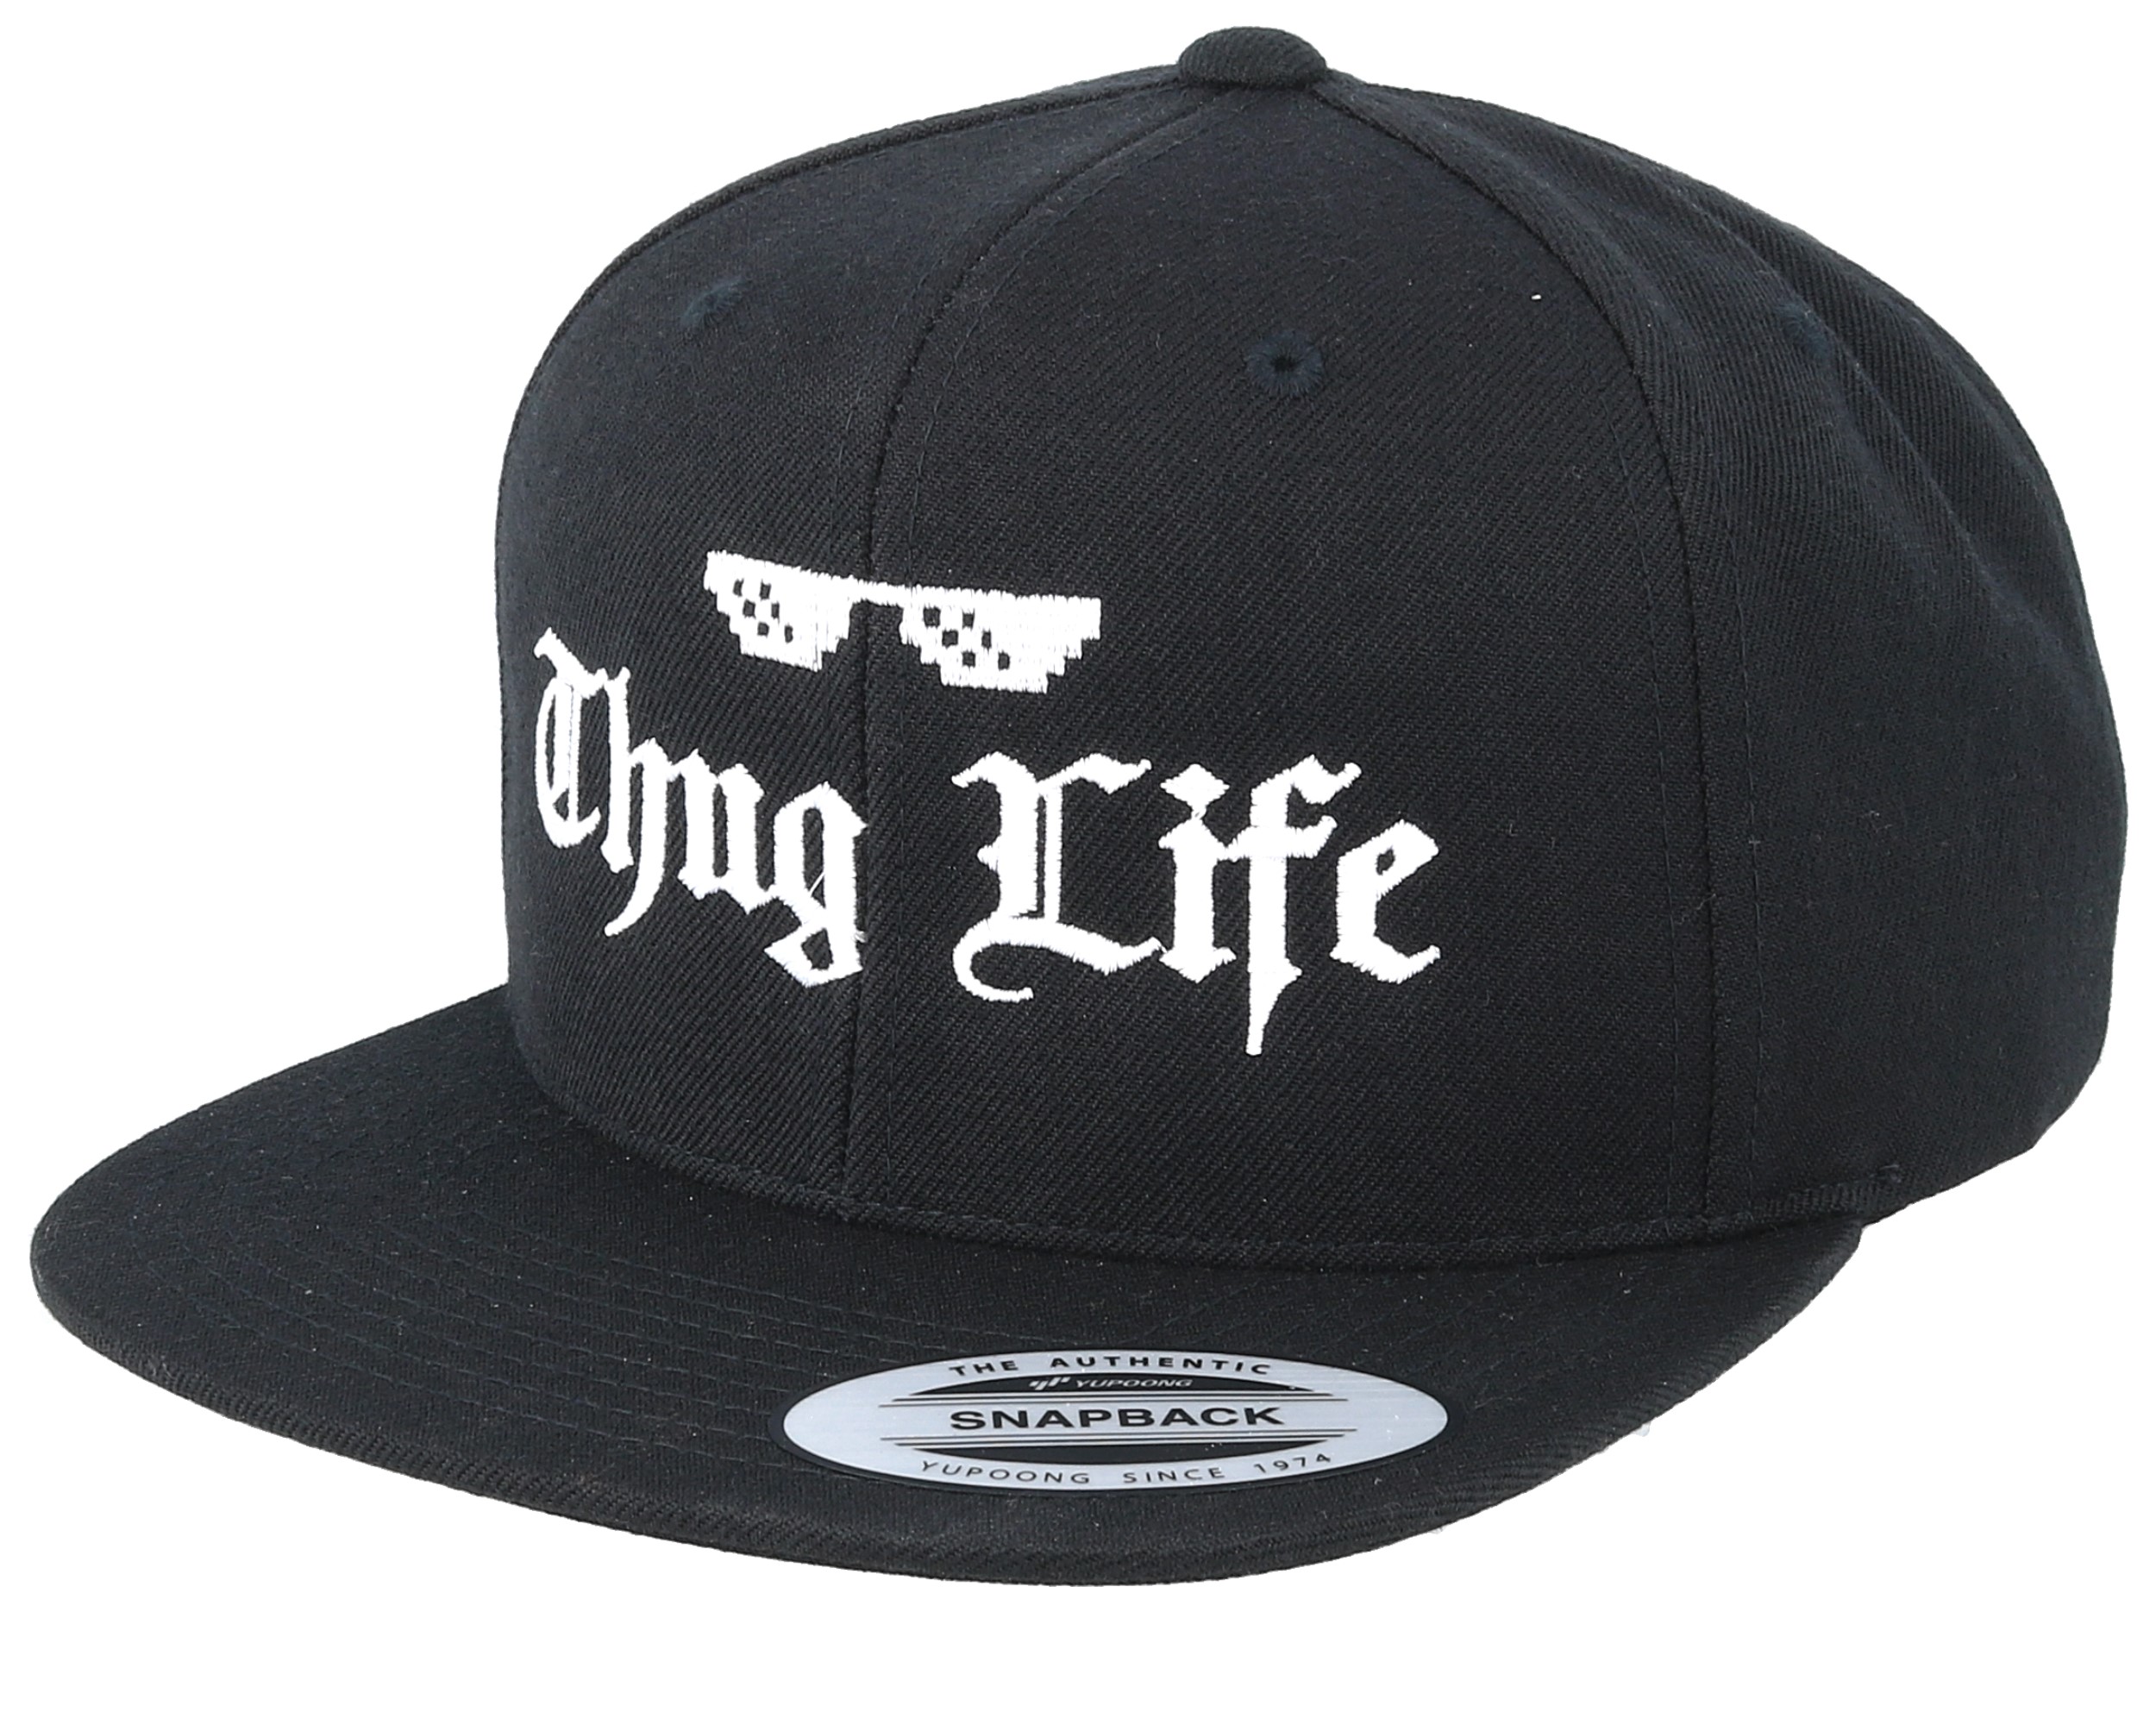 Thug Life Black Snapback - Iconic caps - Hatstoreworld.com